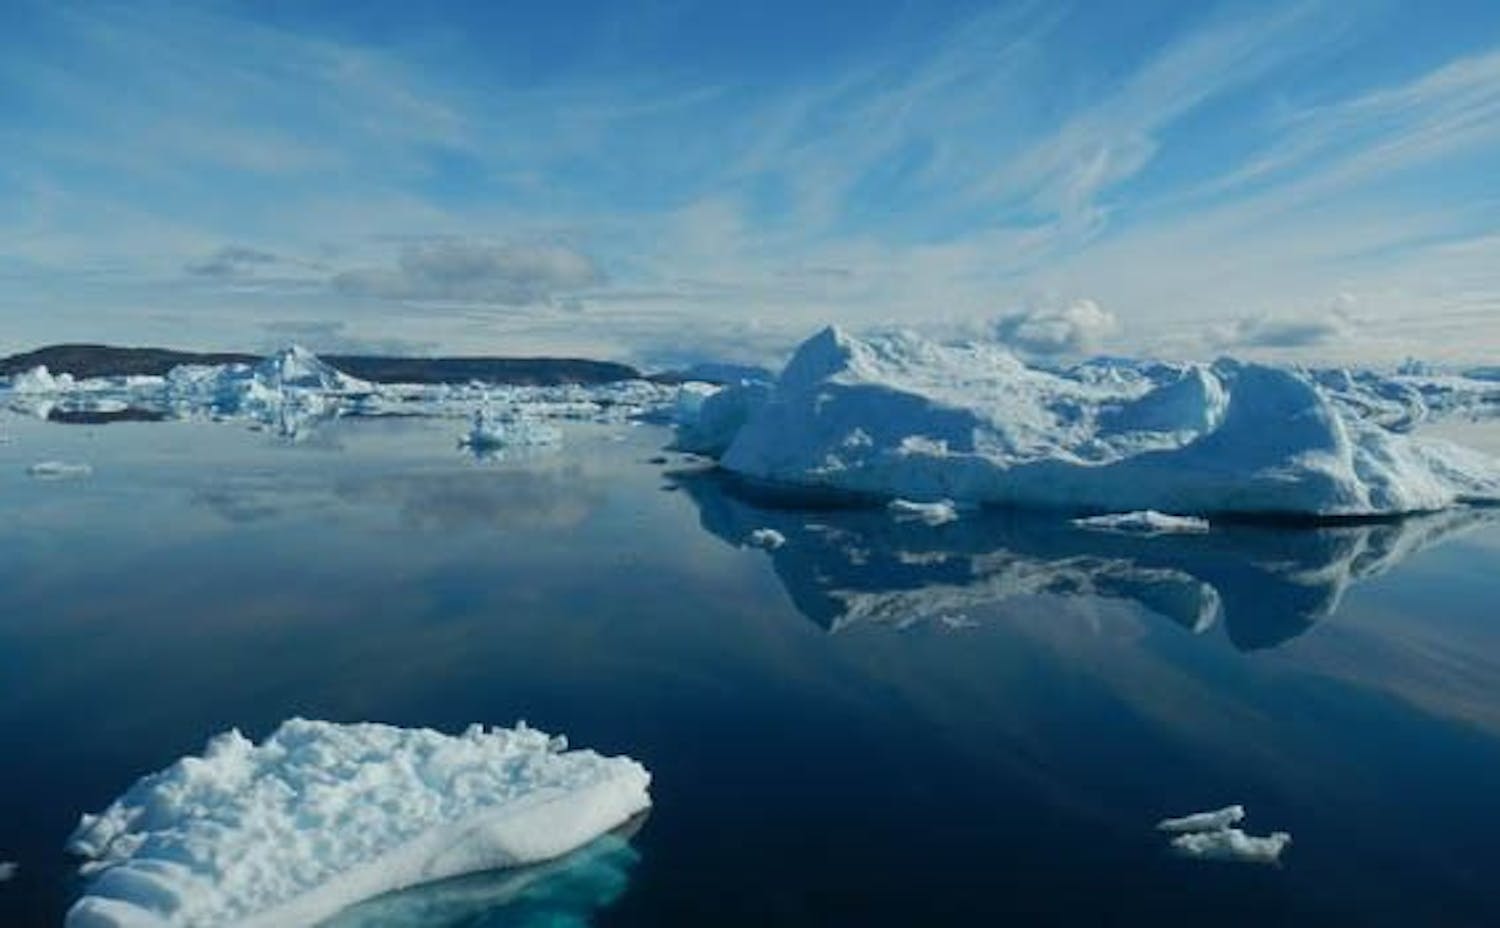 Ледовитый океан температура воздуха. Антарктида Гренландия Арктика Северный Ледовитый океан. Климат и воды Северного Ледовитого океана. Северный Ледовитый океан сверху. Северный океан вода.